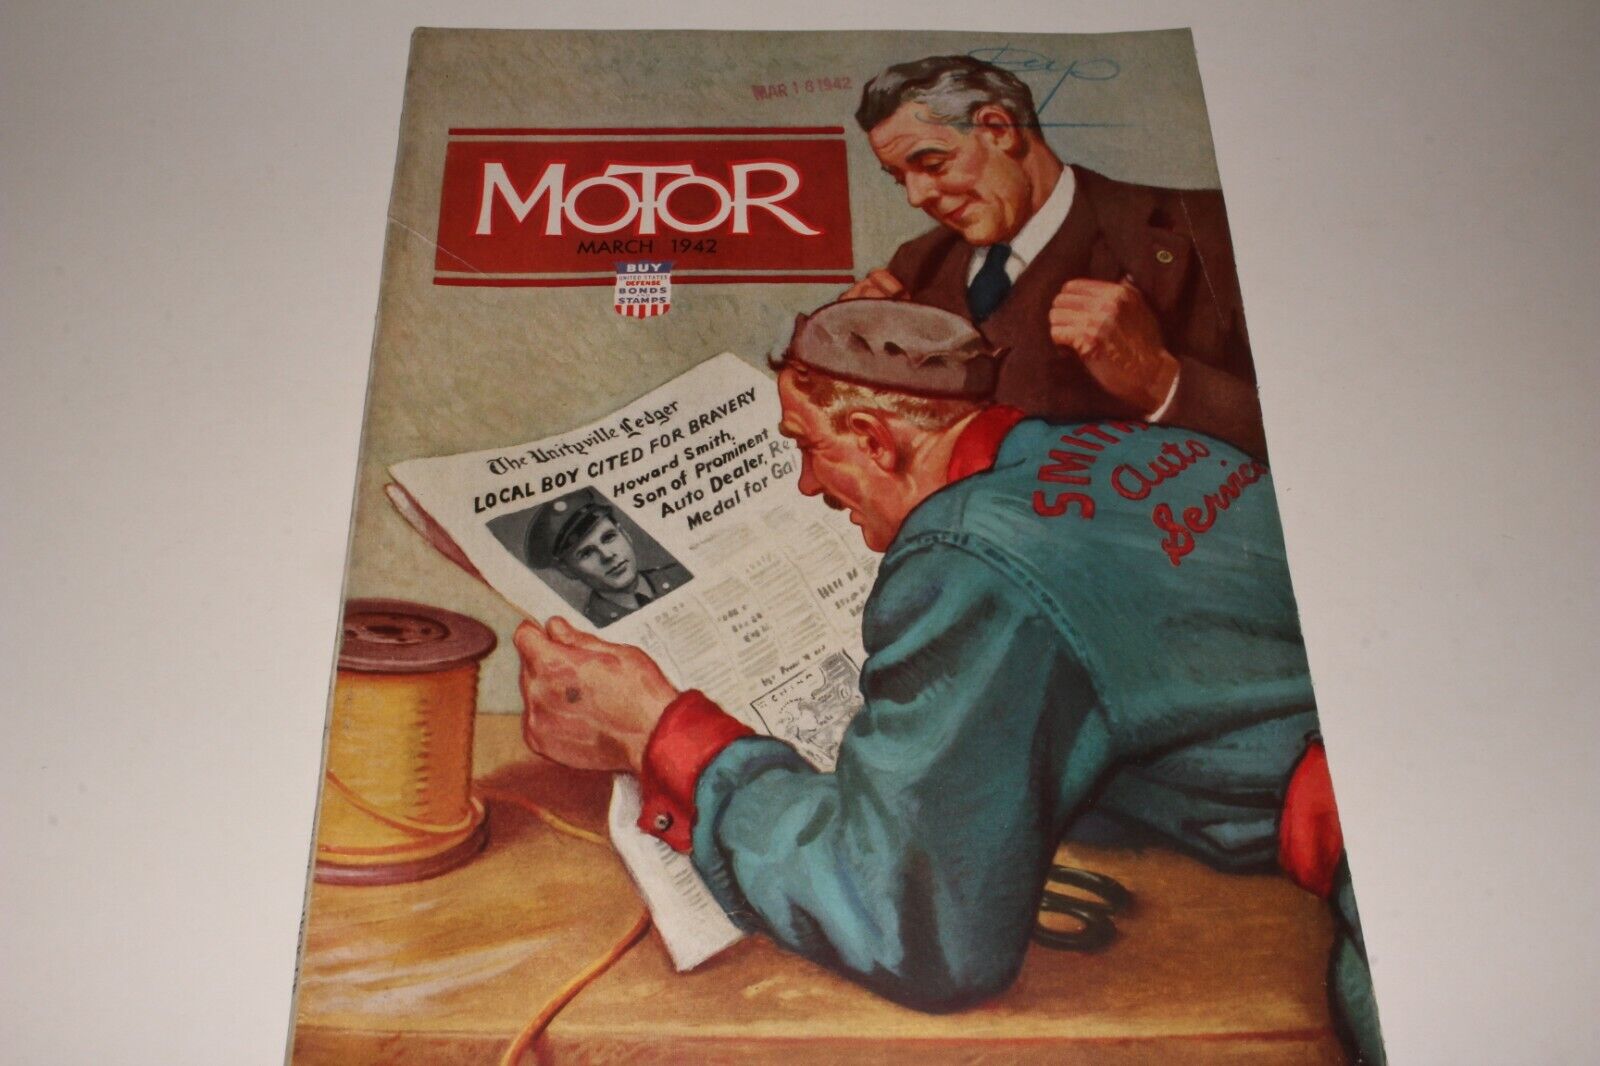 MOTOR MAGAZINE MARCH 1942 ROBERT ROBINSON COVER ART